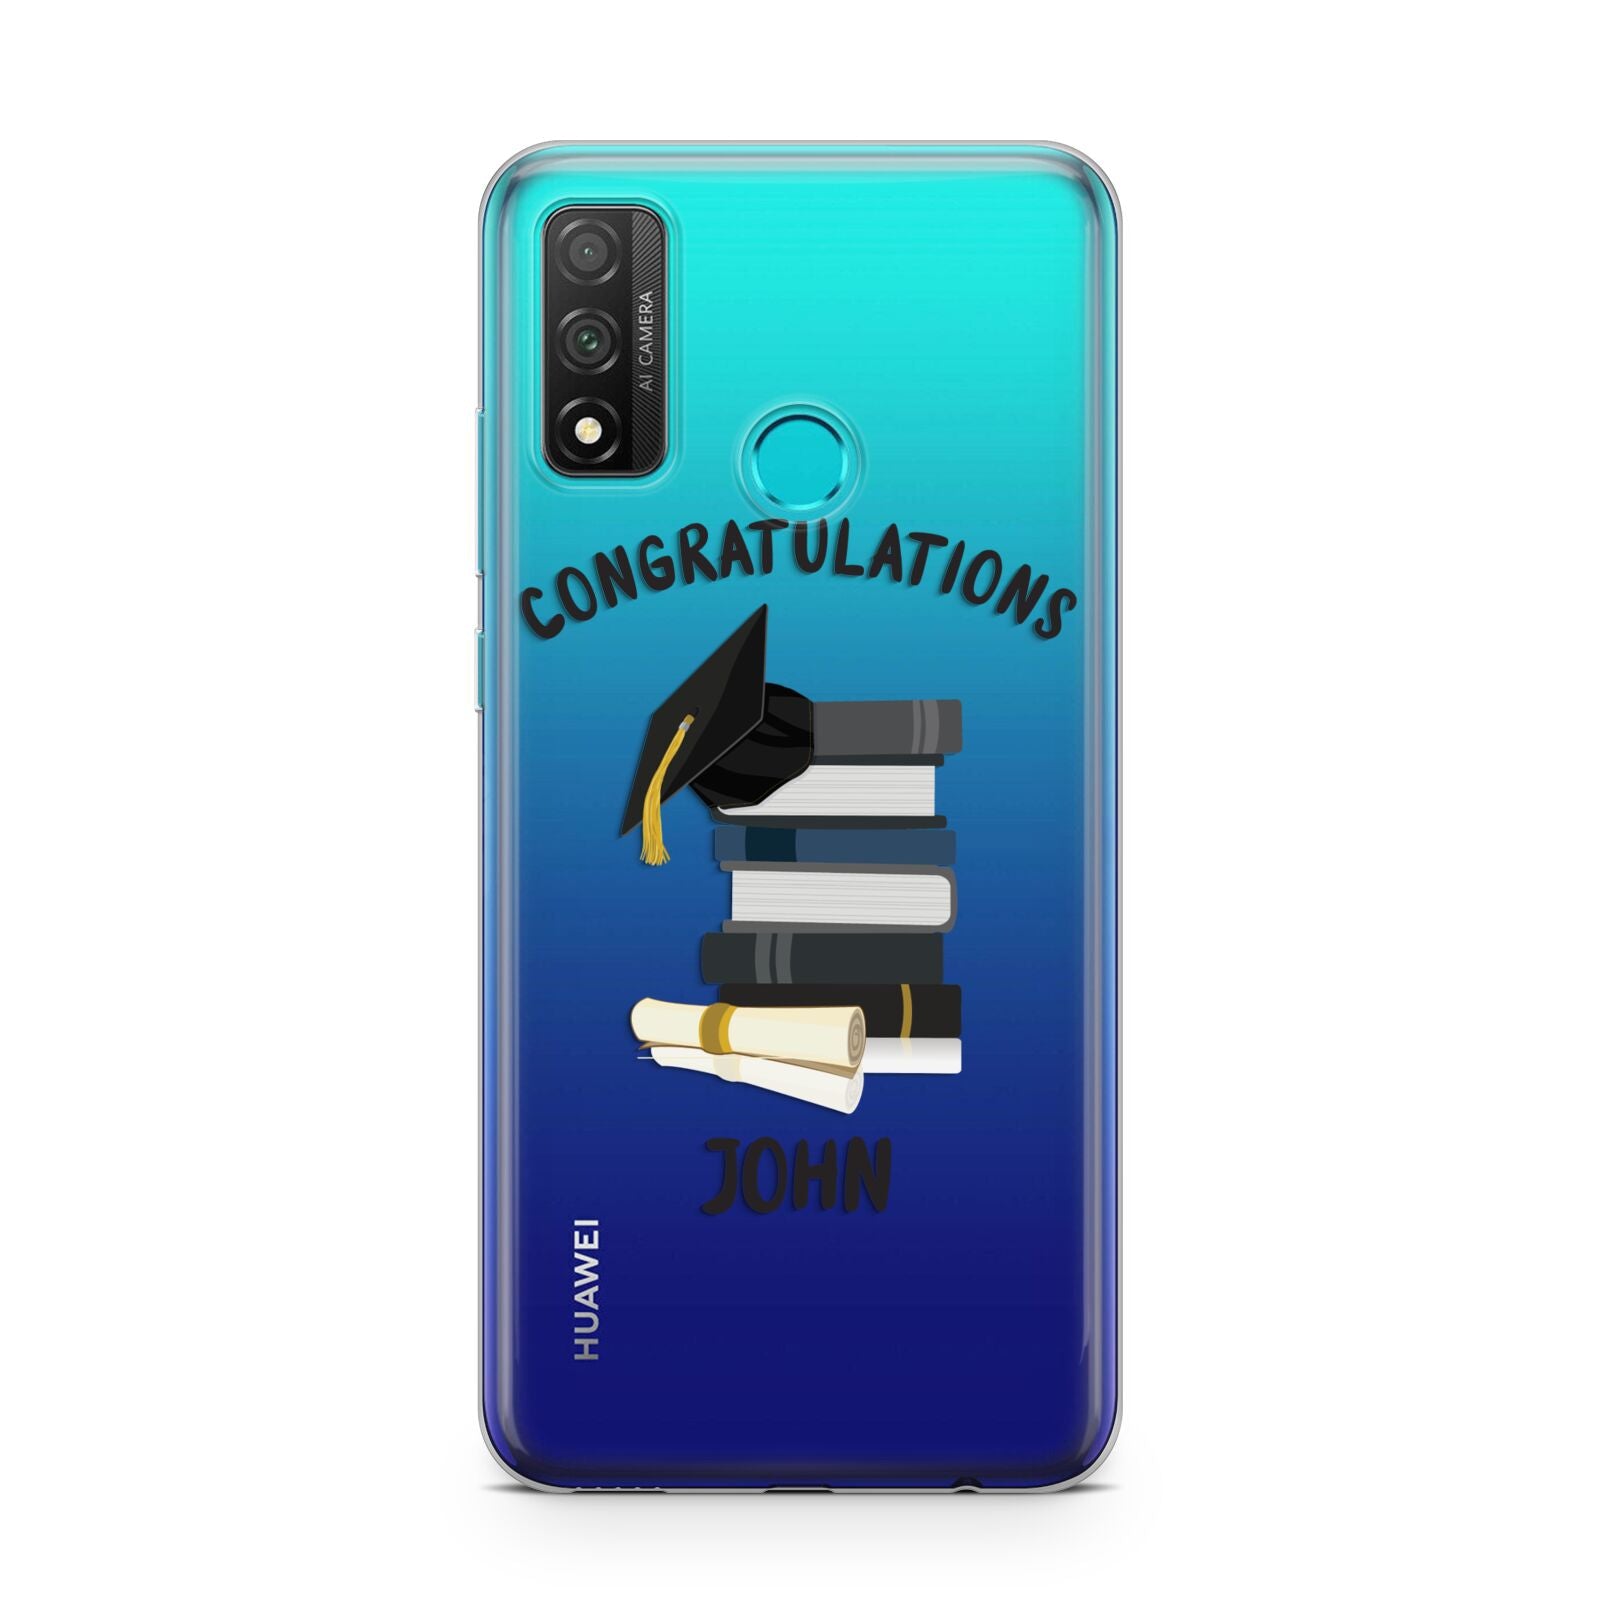 Congratulations Graduate Huawei P Smart 2020